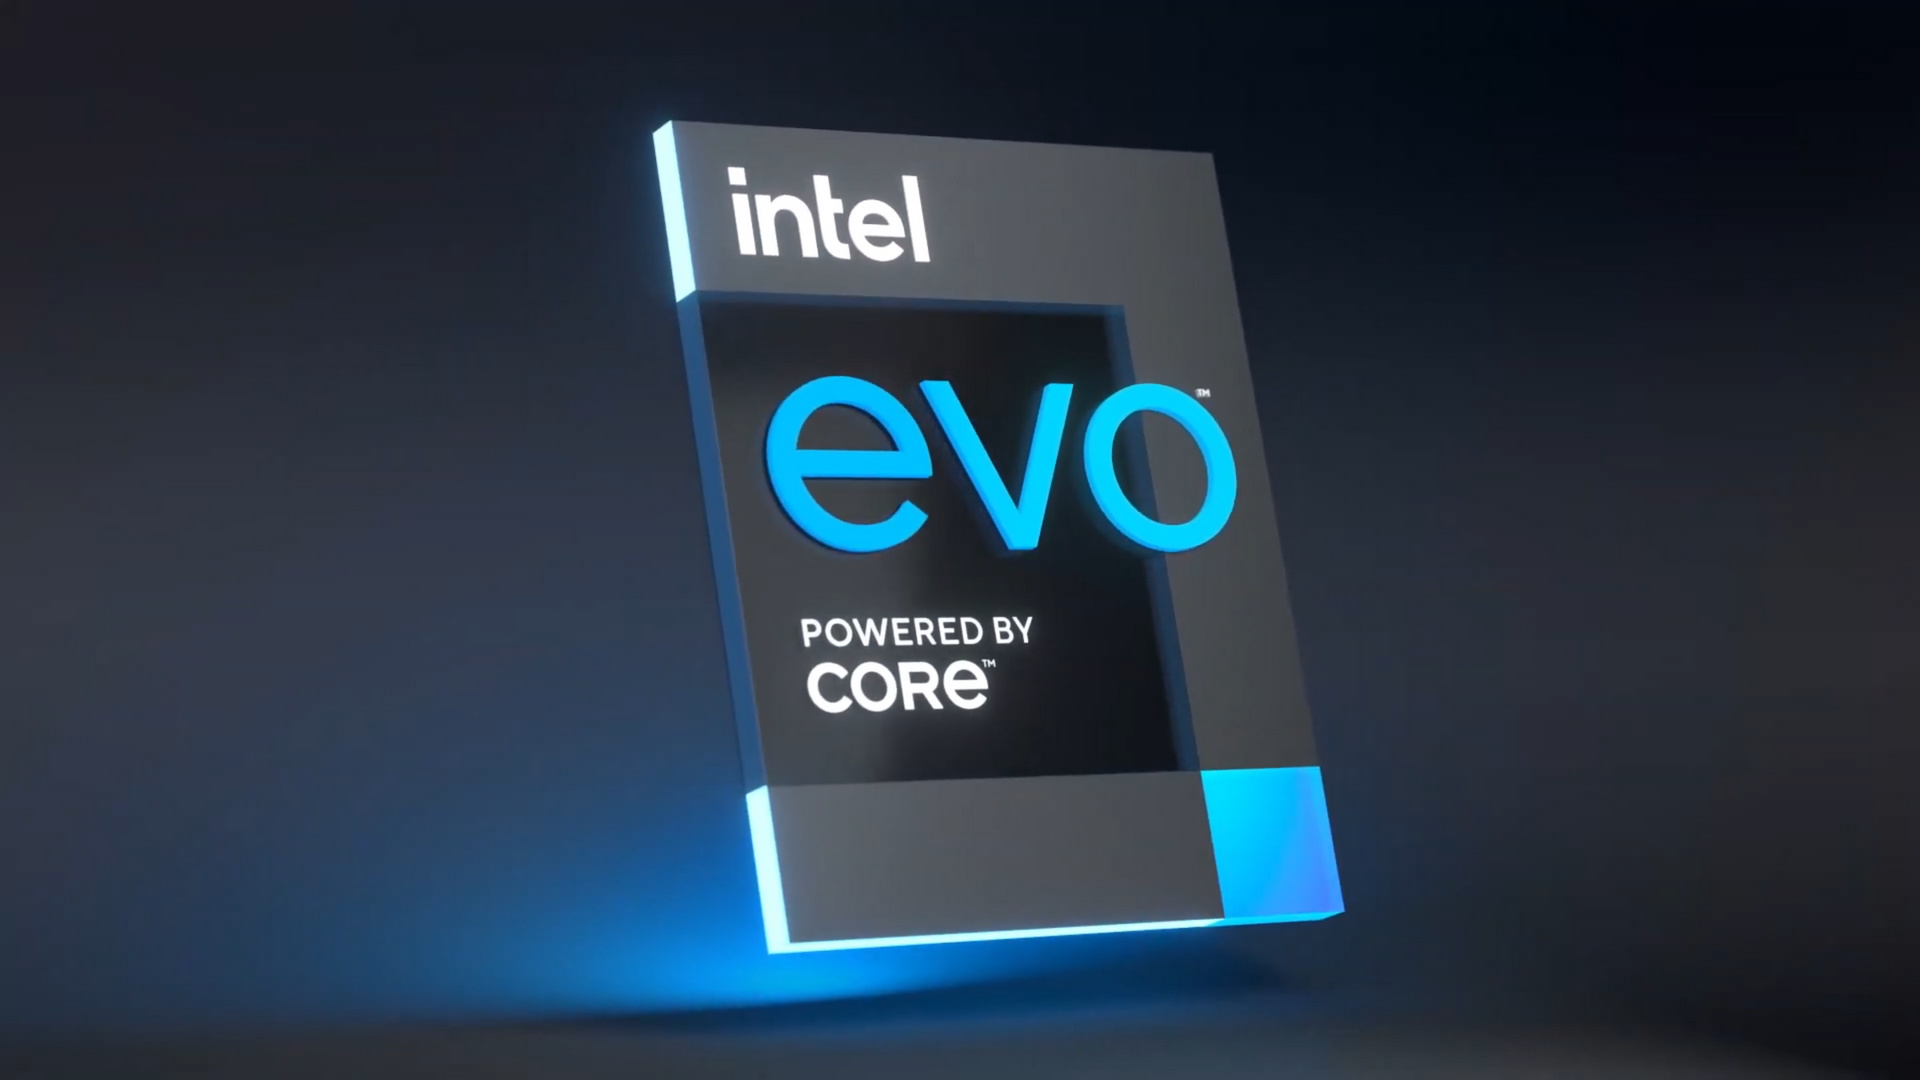 Intel Evo Platform powered by Core